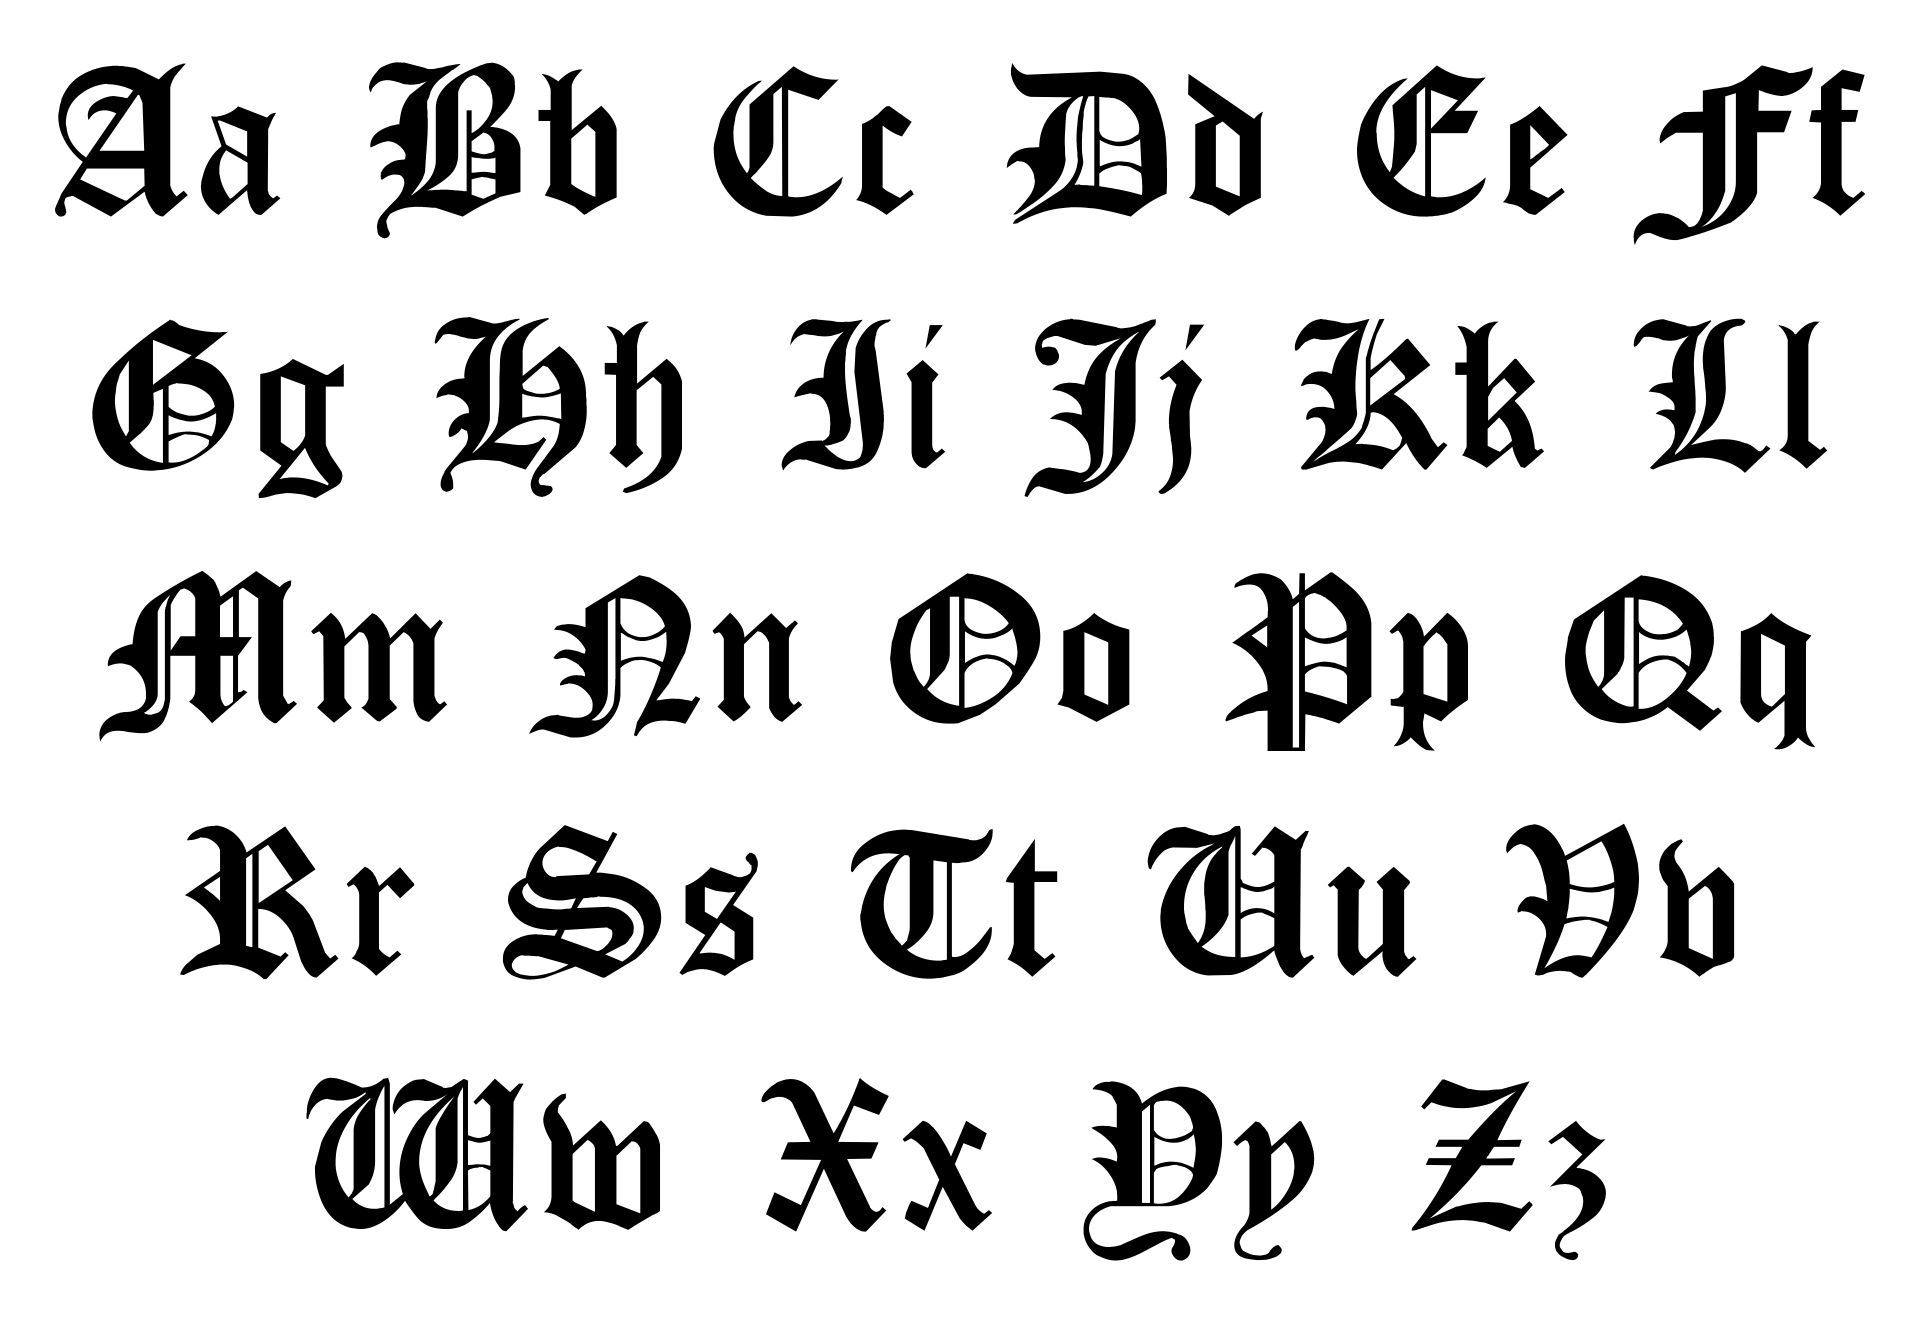 gothic calligraphy alphabet a z